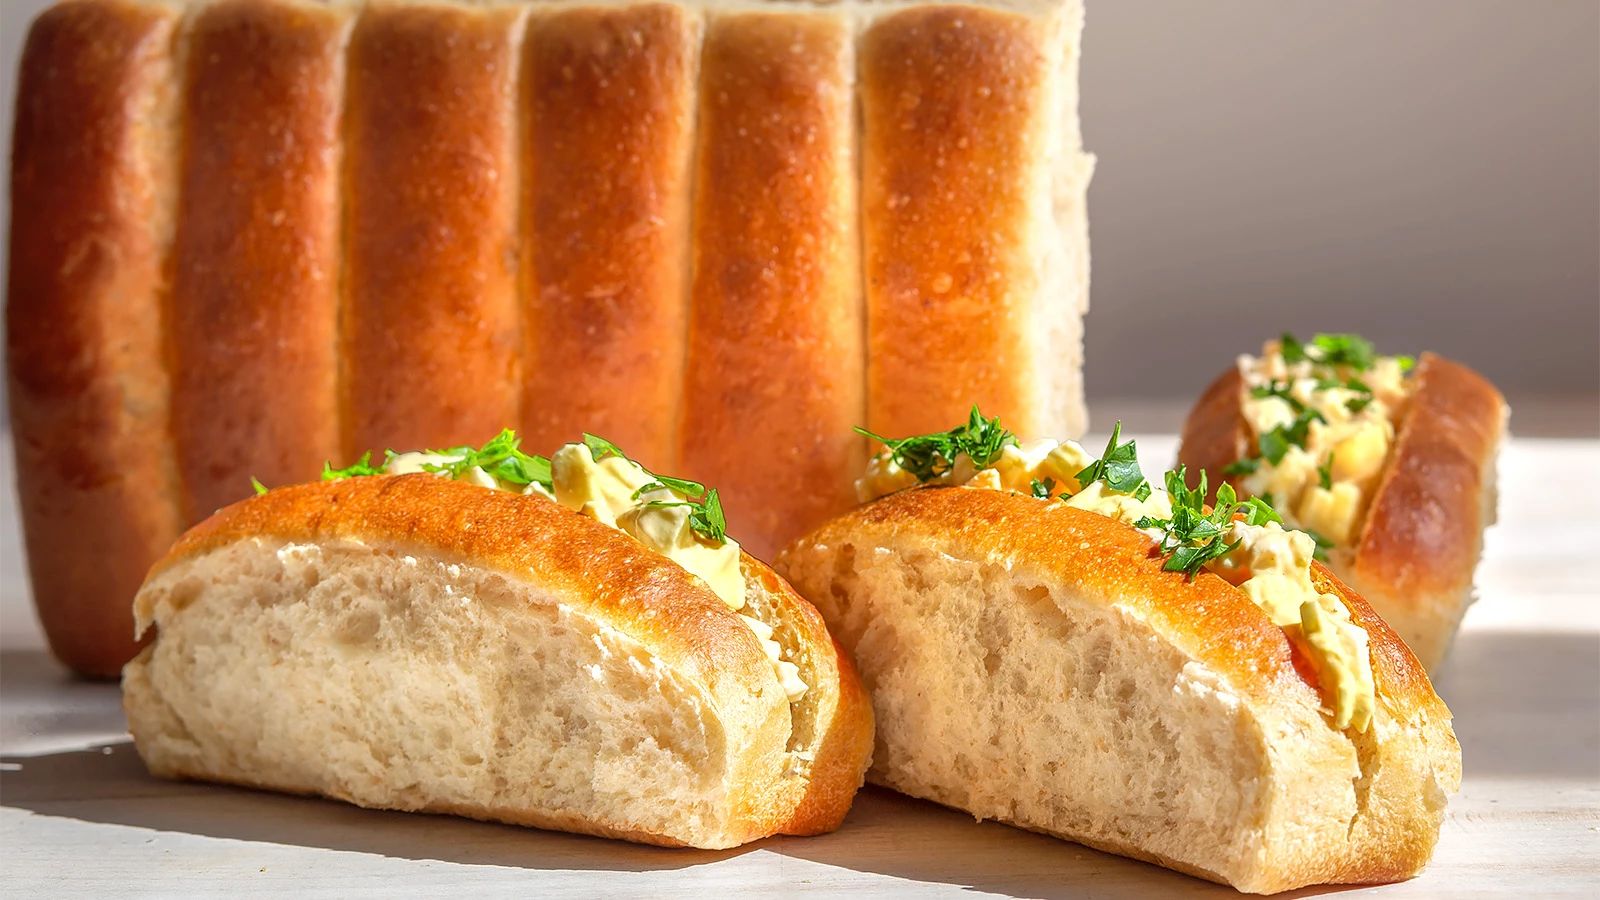 Potato Bread Rolls With A USA pans, Finger roll, Bun Tin